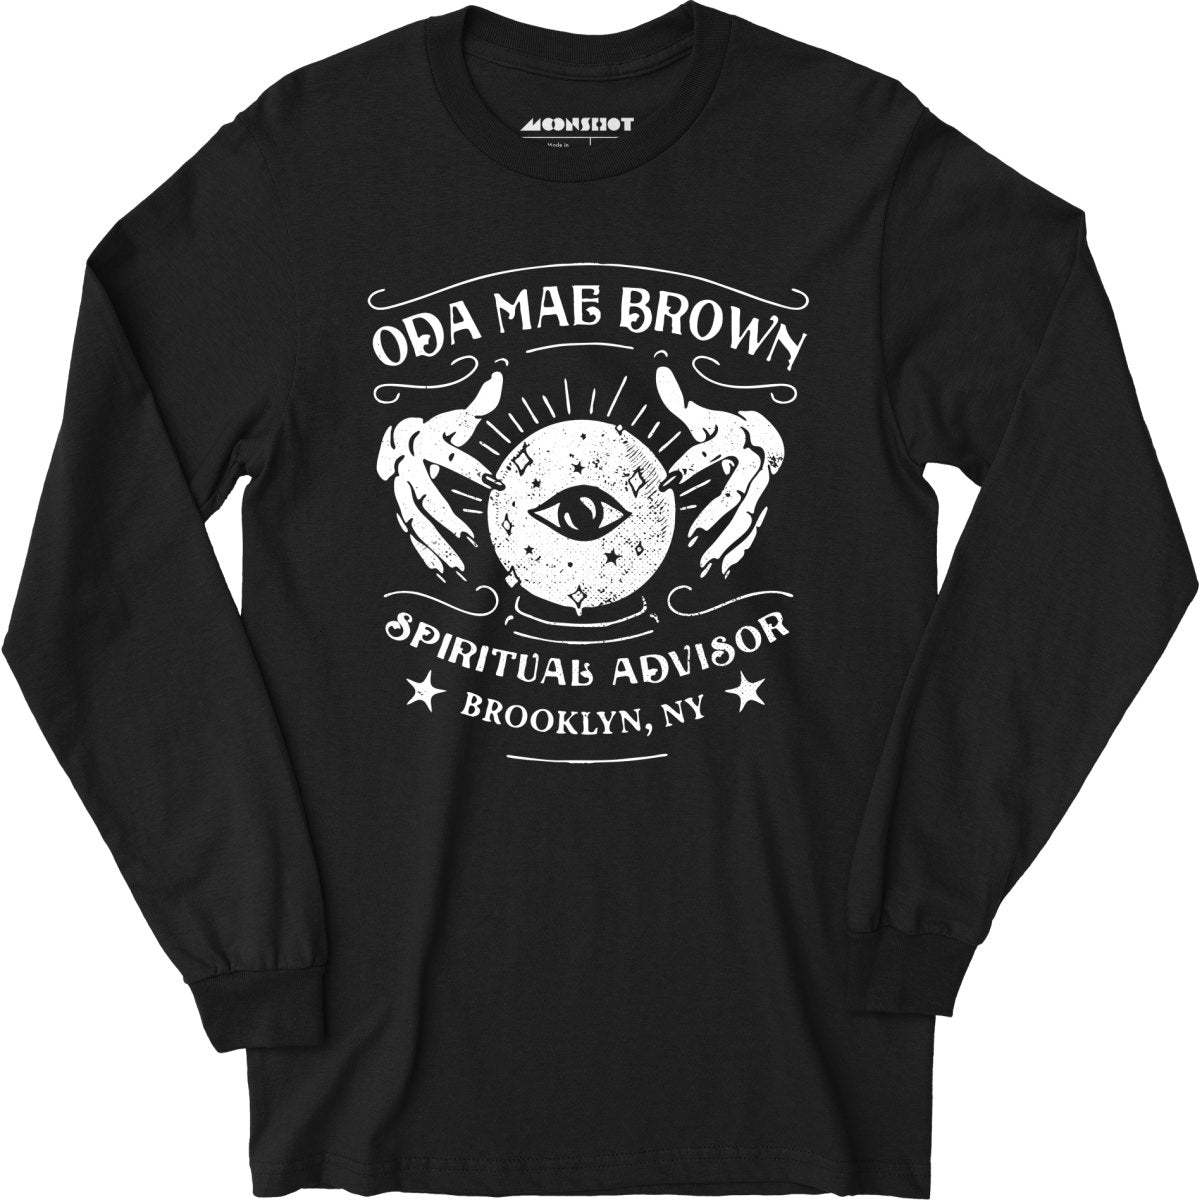 Ghost - Oda Mae Brown - Spiritual Advisor - Long Sleeve T-Shirt